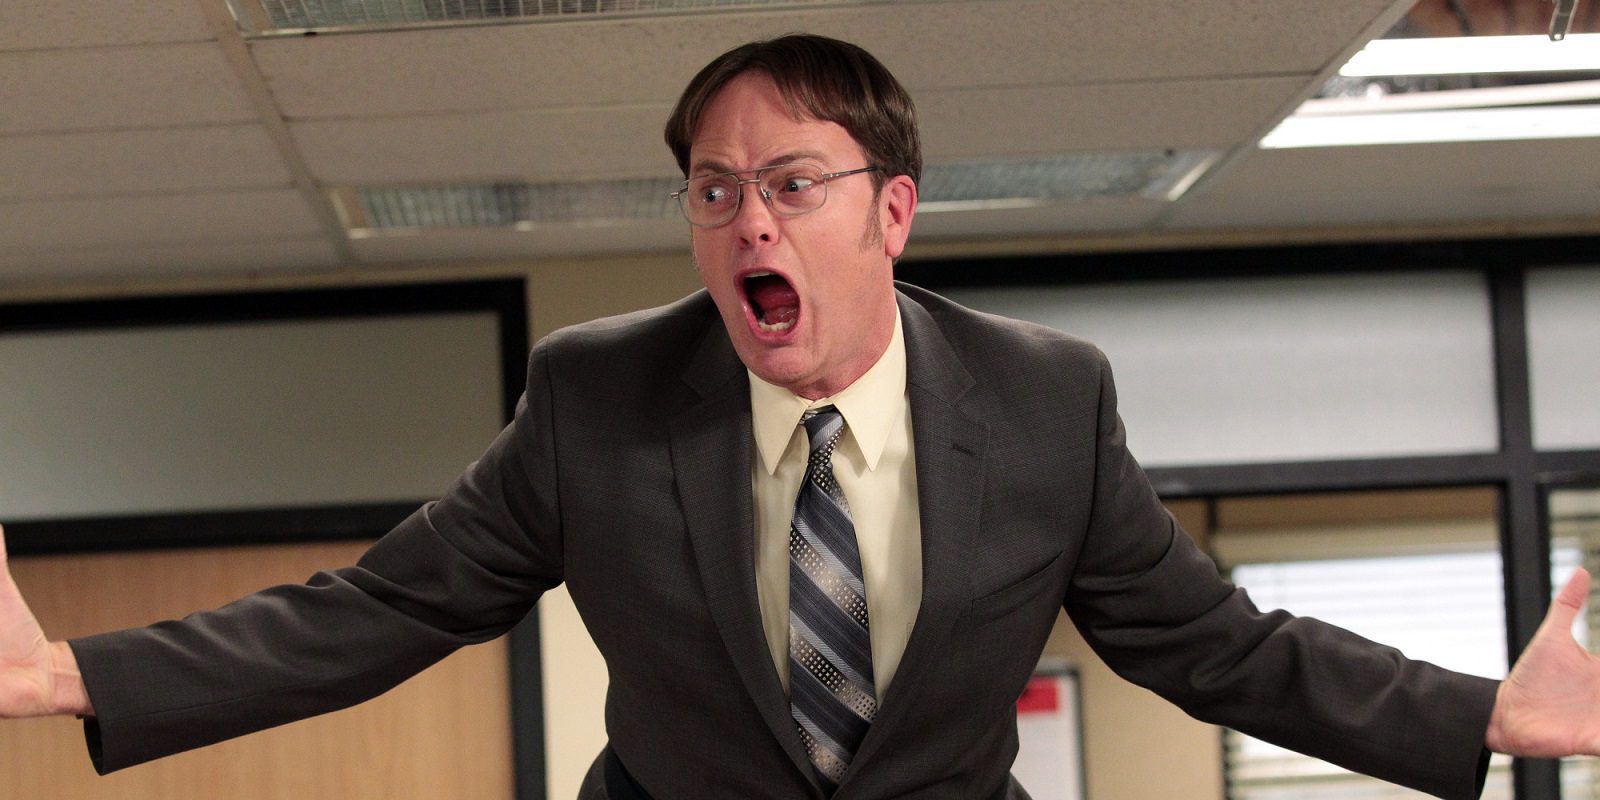 NBC planea revivir la serie 'The Office' con un nuevo reparto